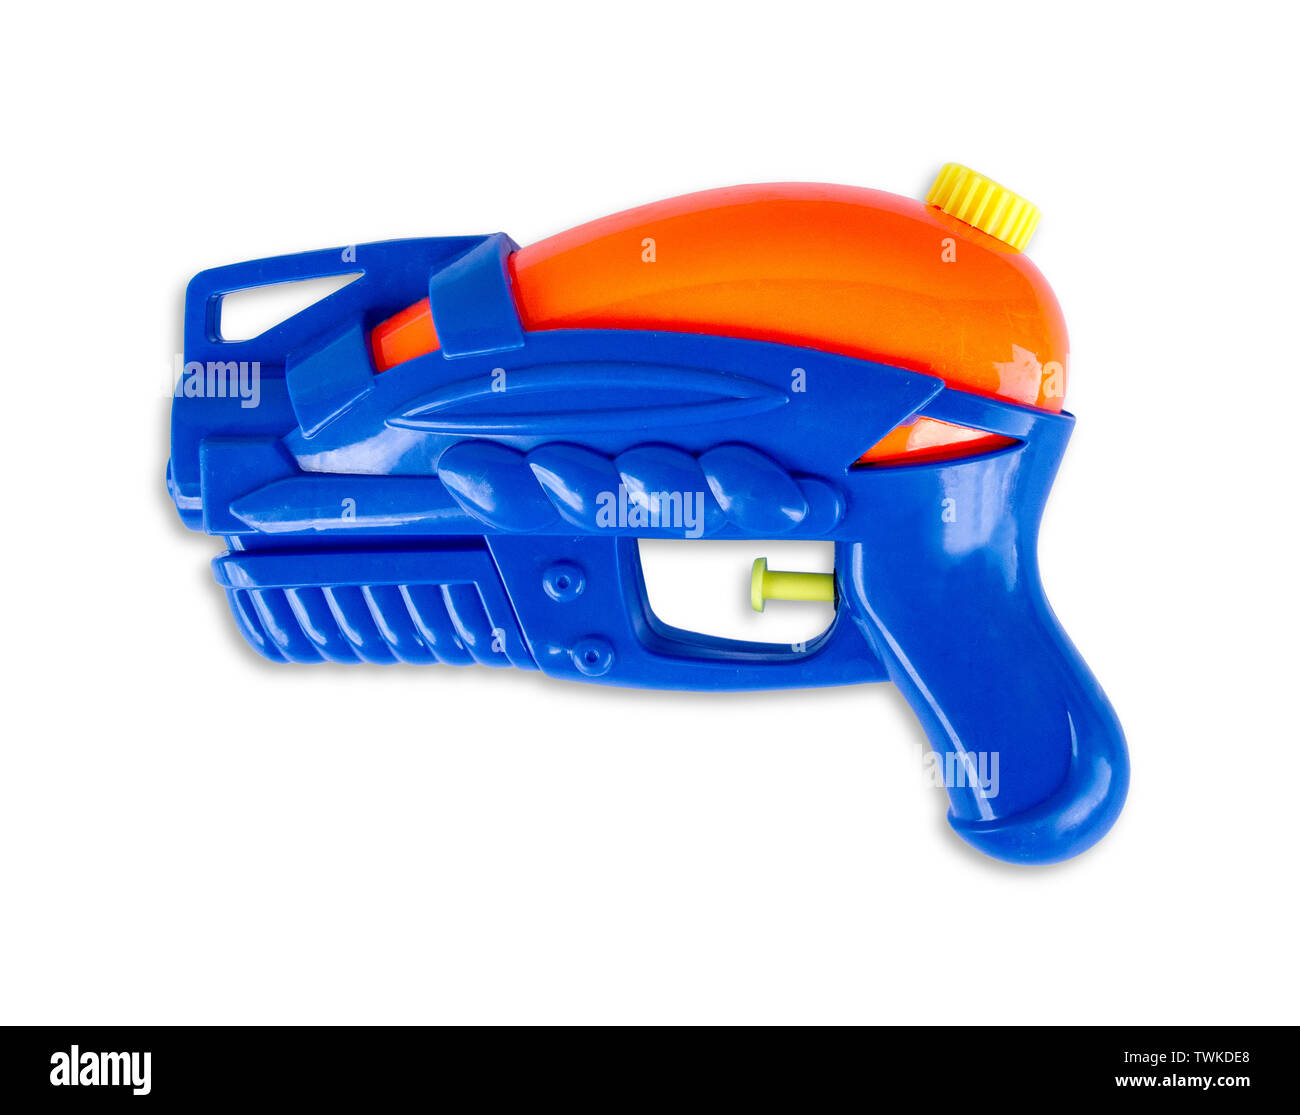 Revólver de juguete azul de plástico, vista lateral Fotografía de stock -  Alamy